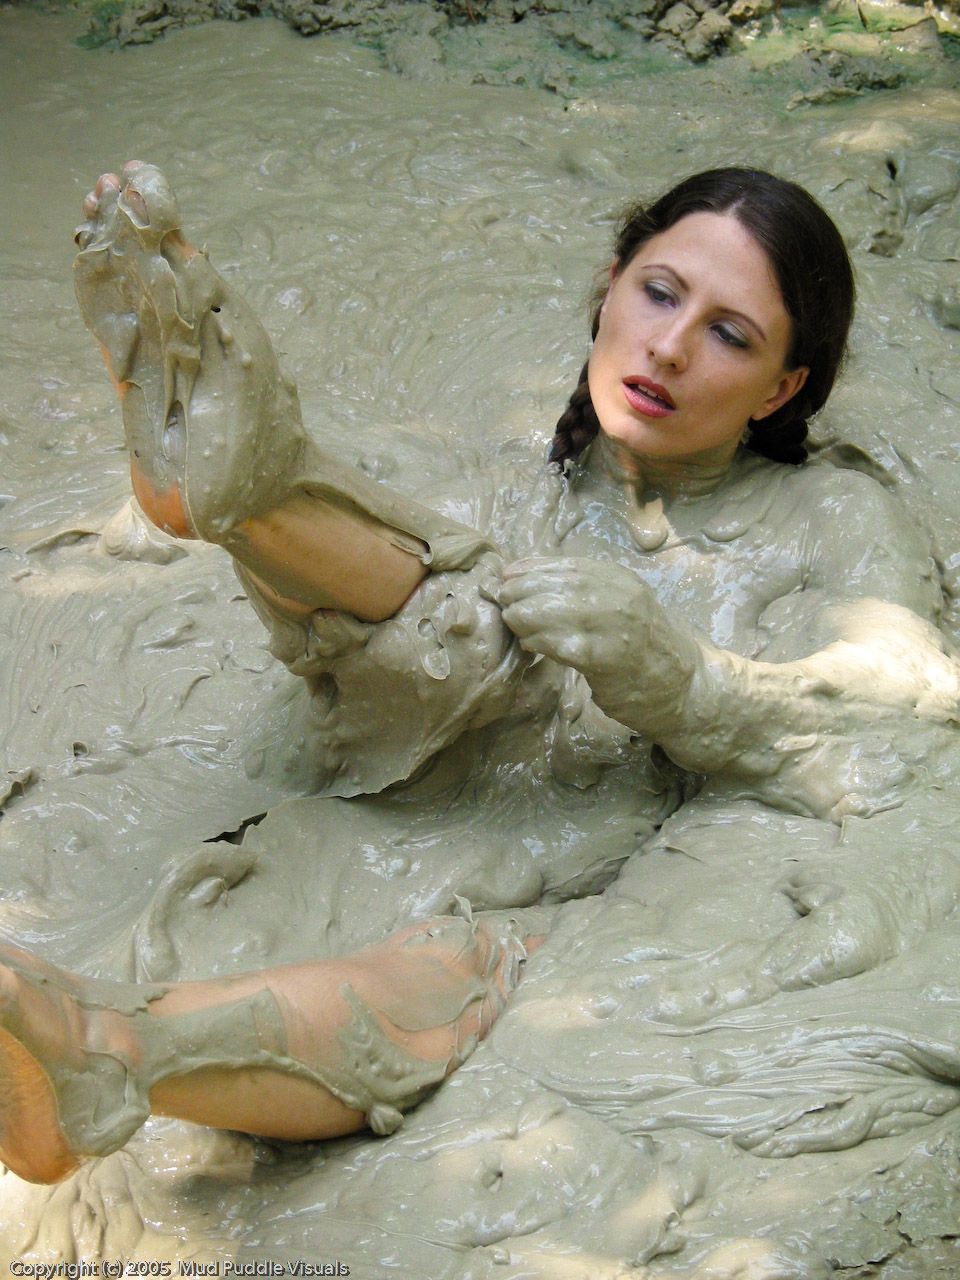 alexandra landau add photo mud puddle visuals trailer